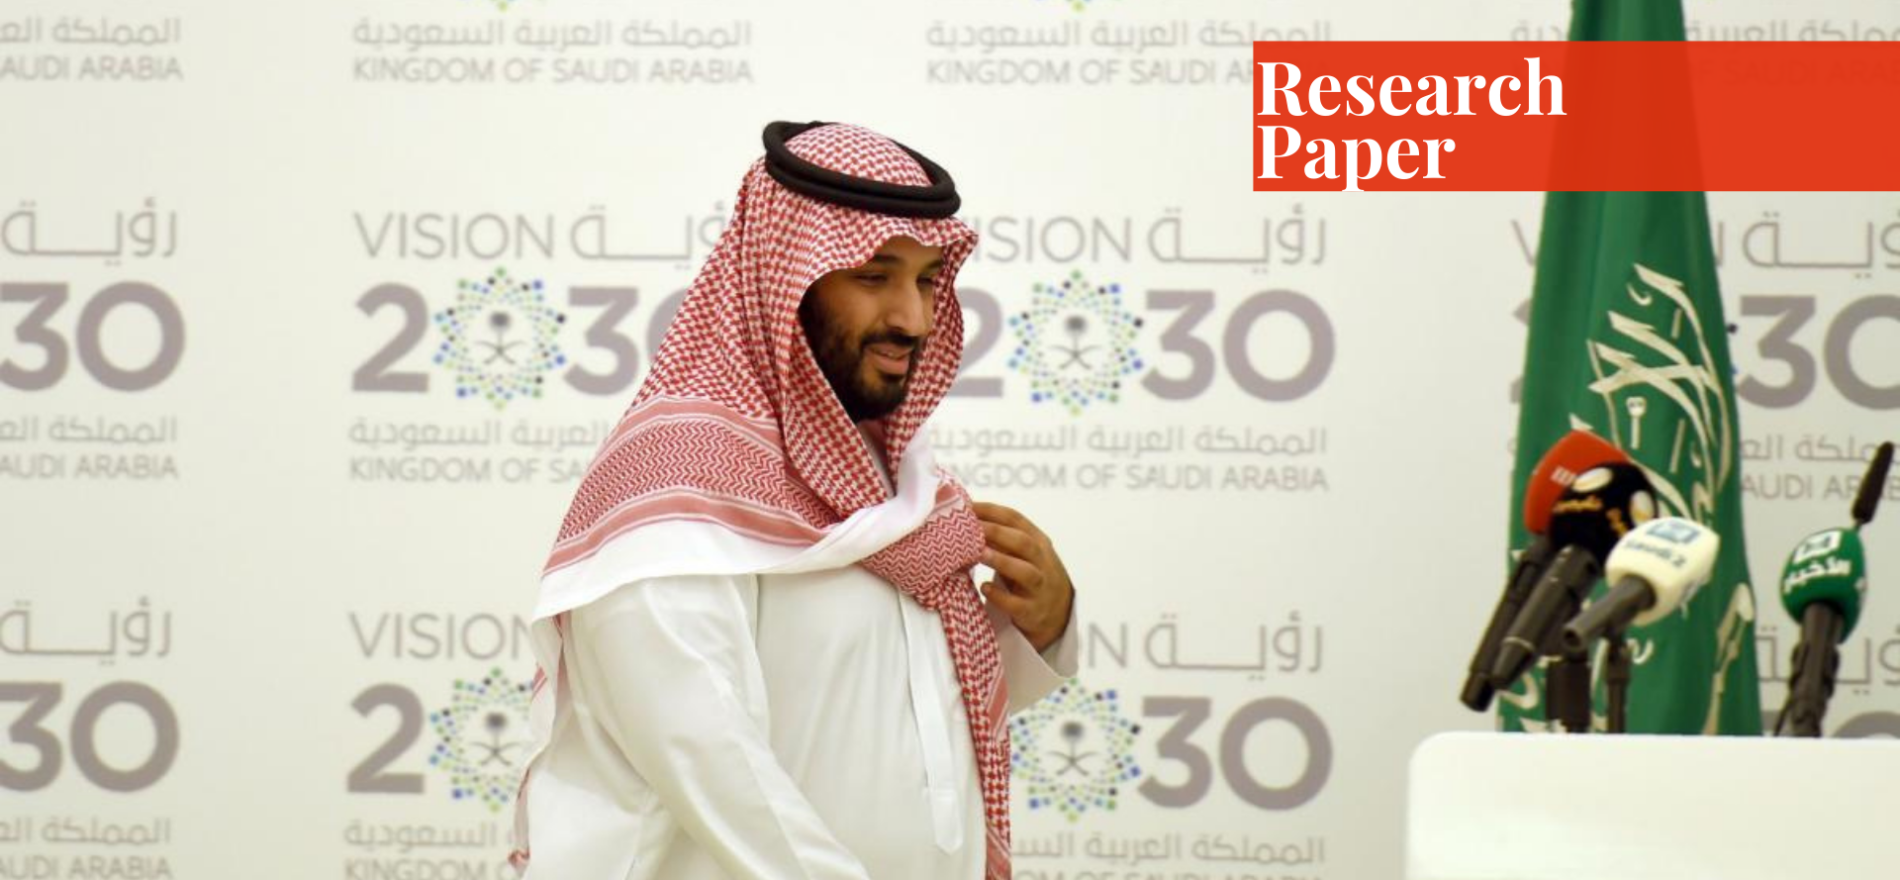 saudi arabia's vision 2030